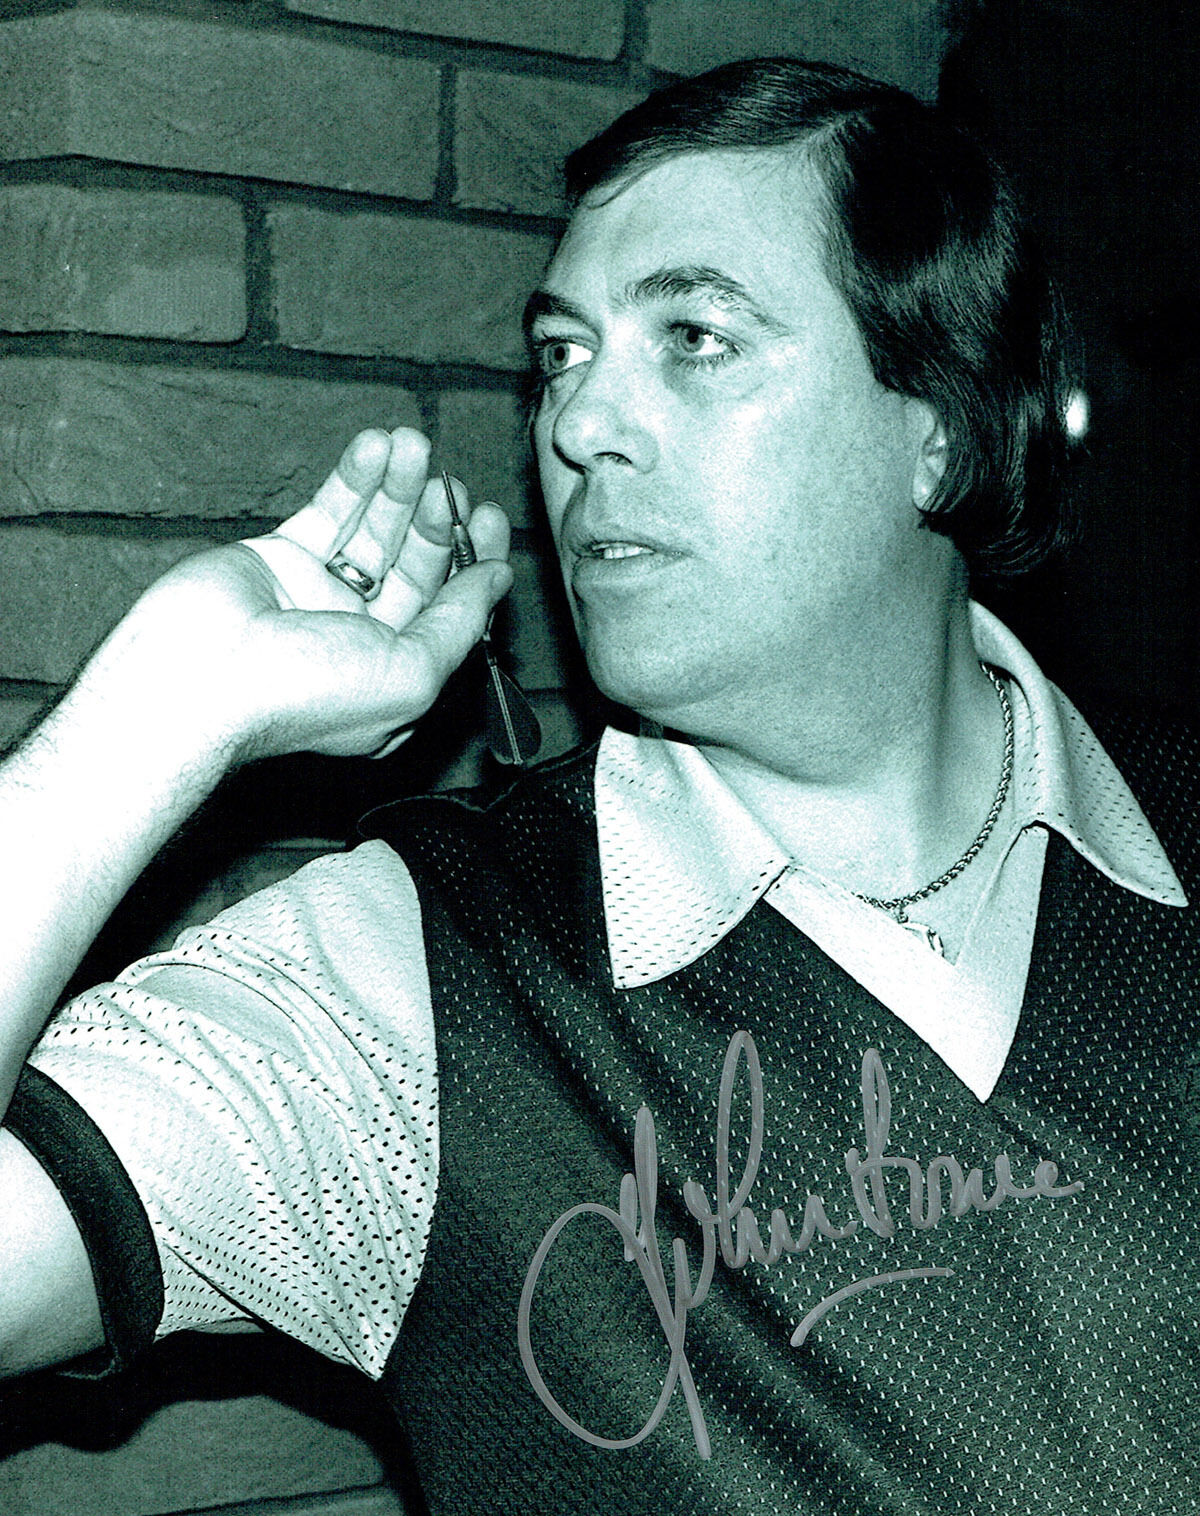 JOHN LOWE 9 Dart Legend HAND SIGNED autograph 10x8 Action Photo Poster painting AFTAL